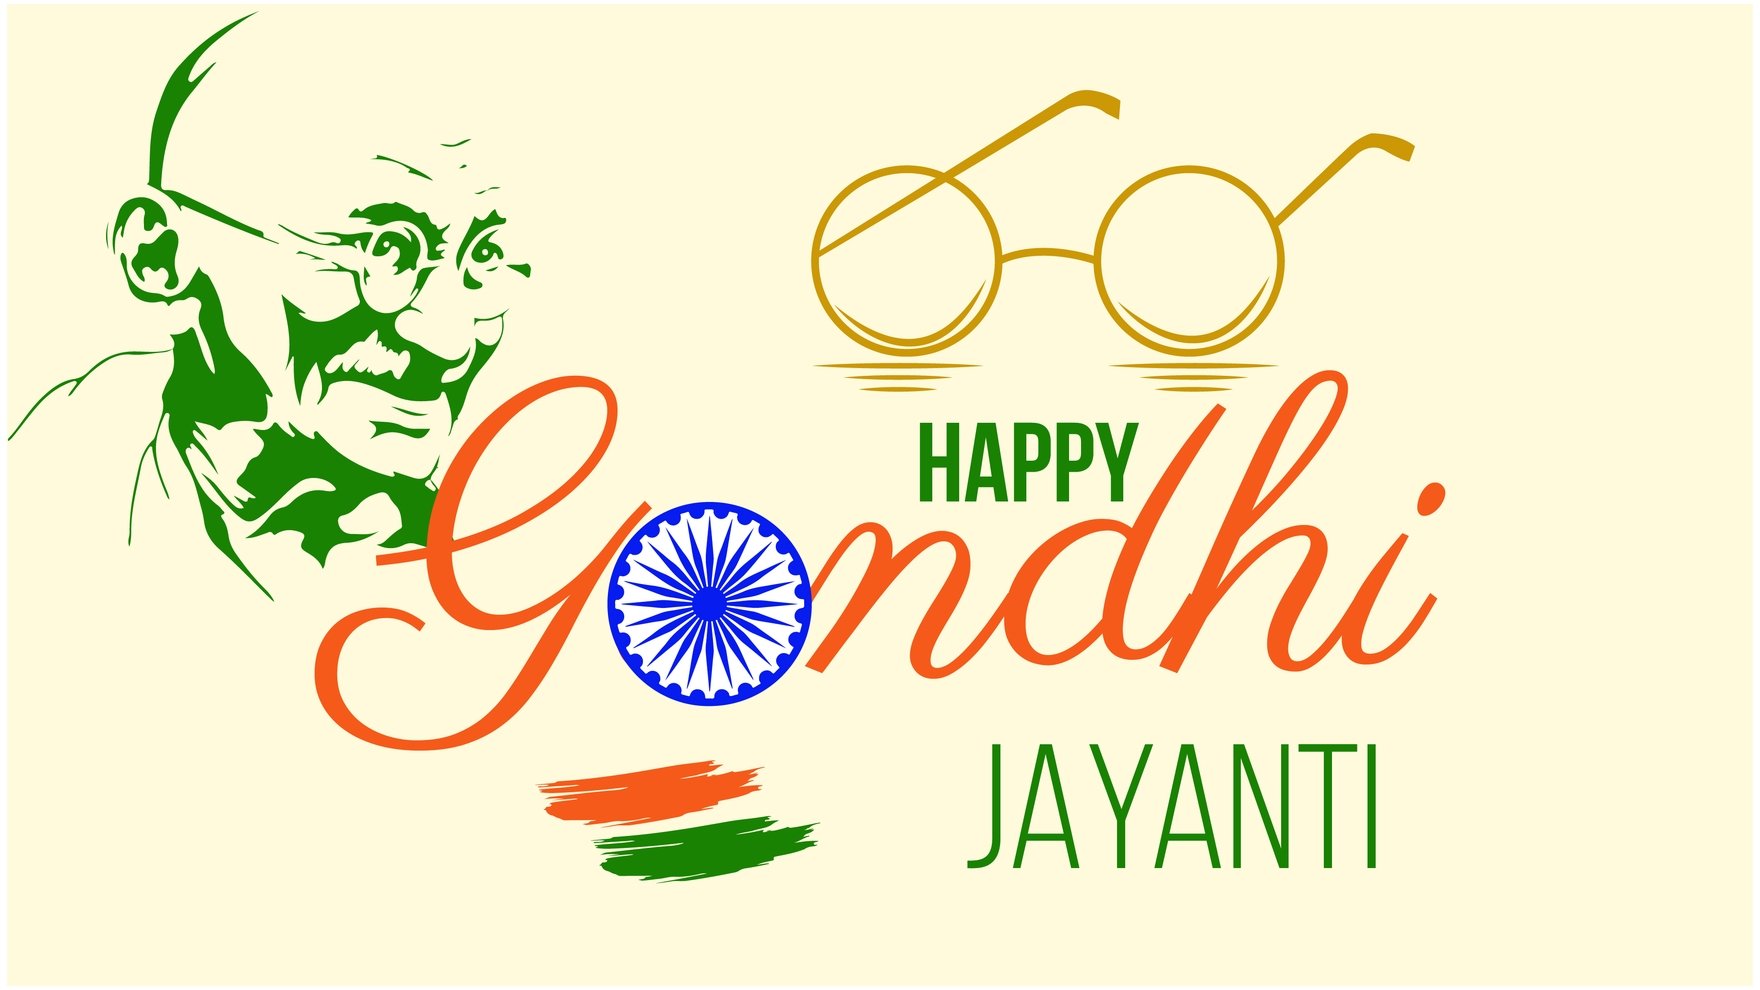 Happy Gandhi Jayanti Background - EPS, Illustrator, JPG, PSD, PNG, PDF, SVG  